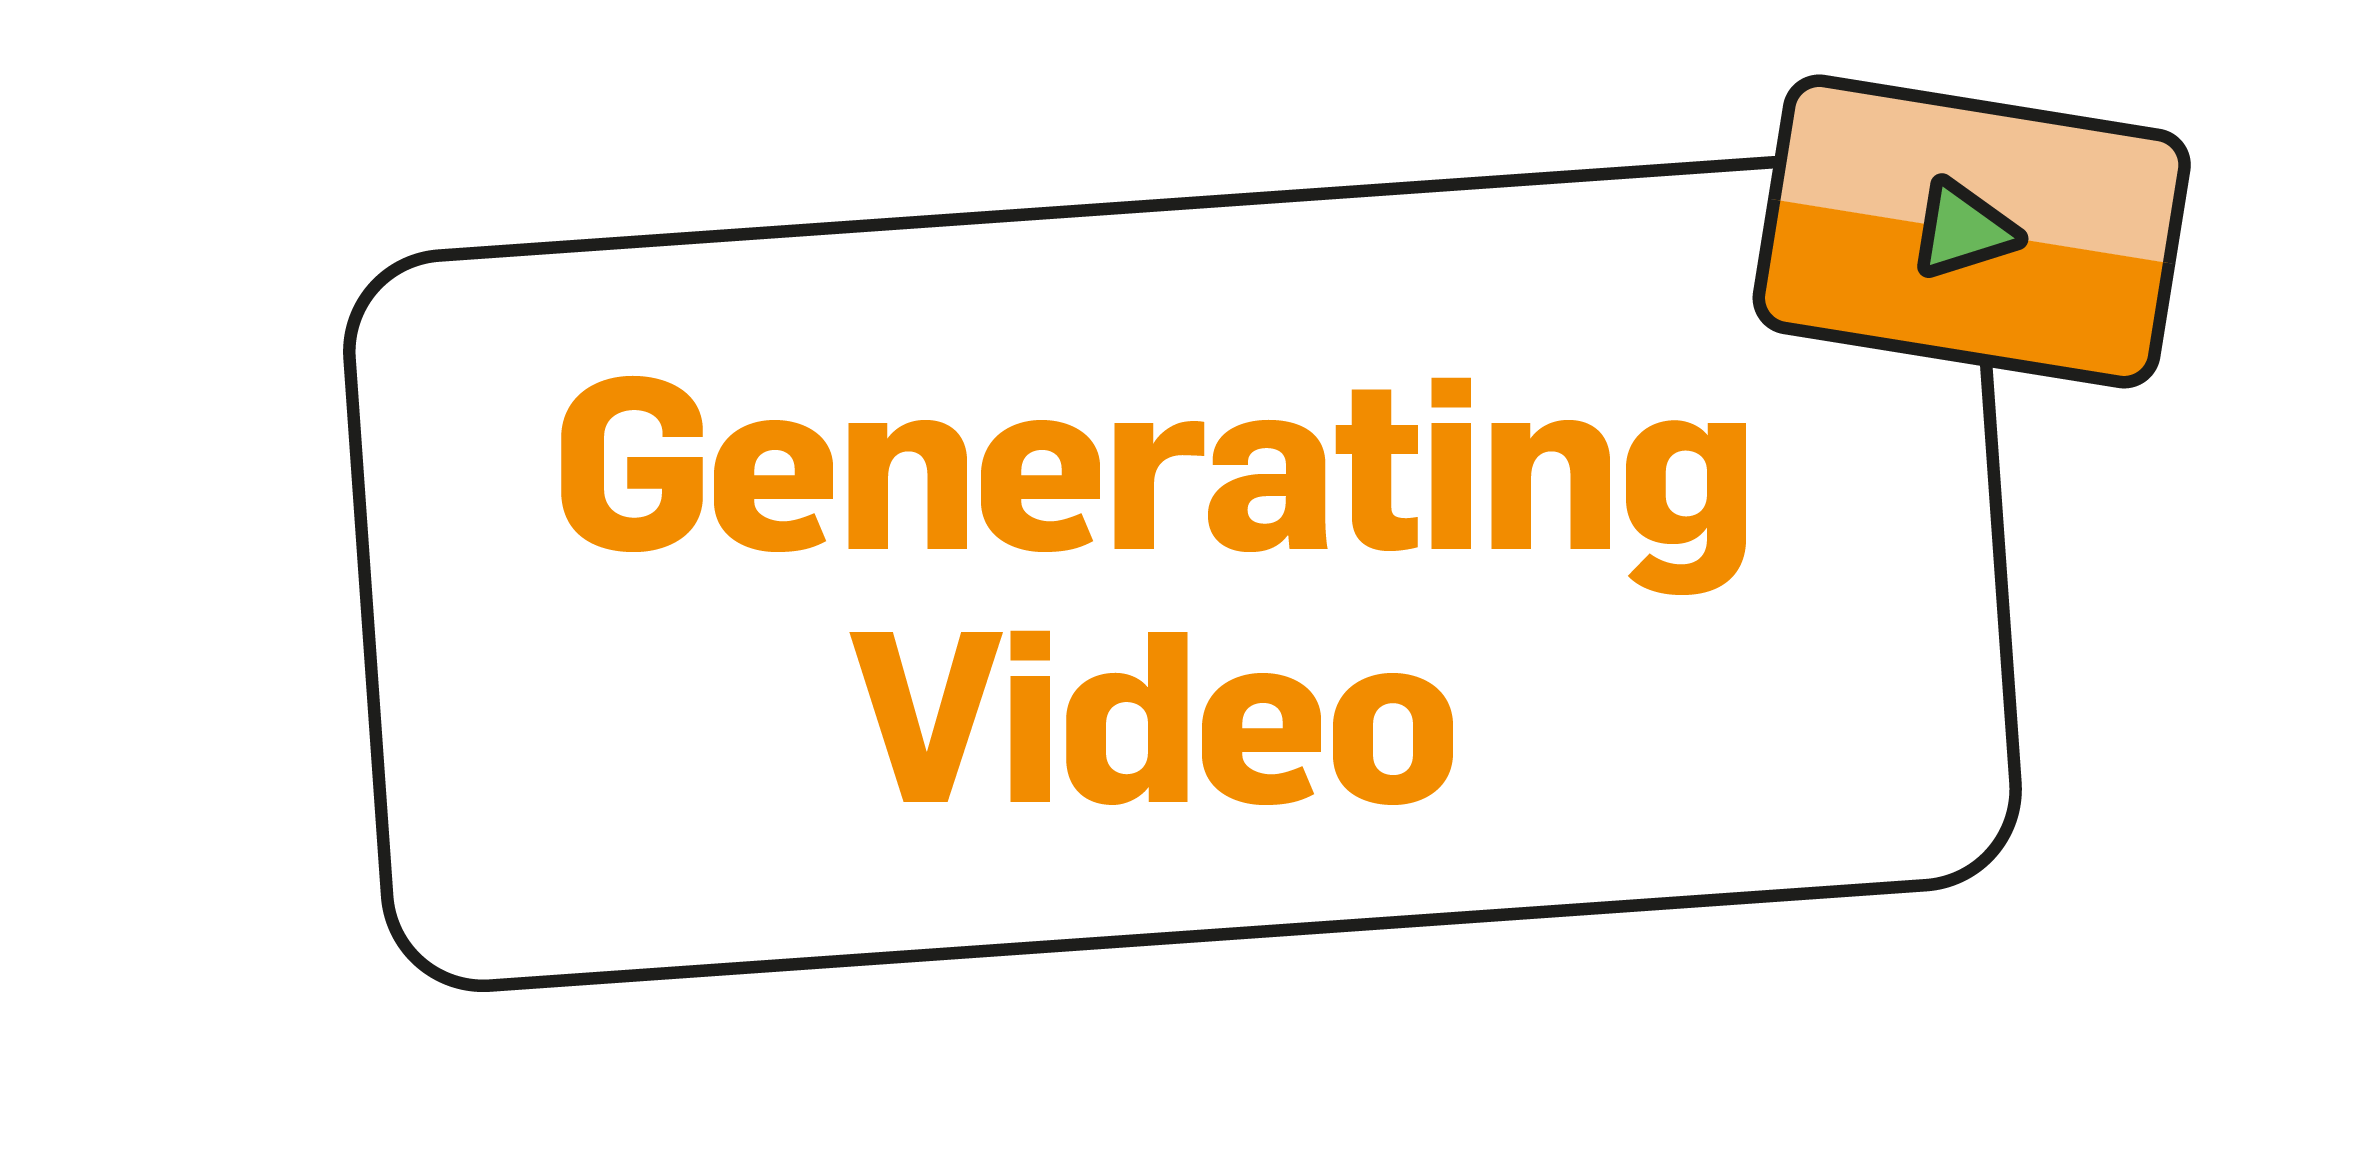 Generating Video